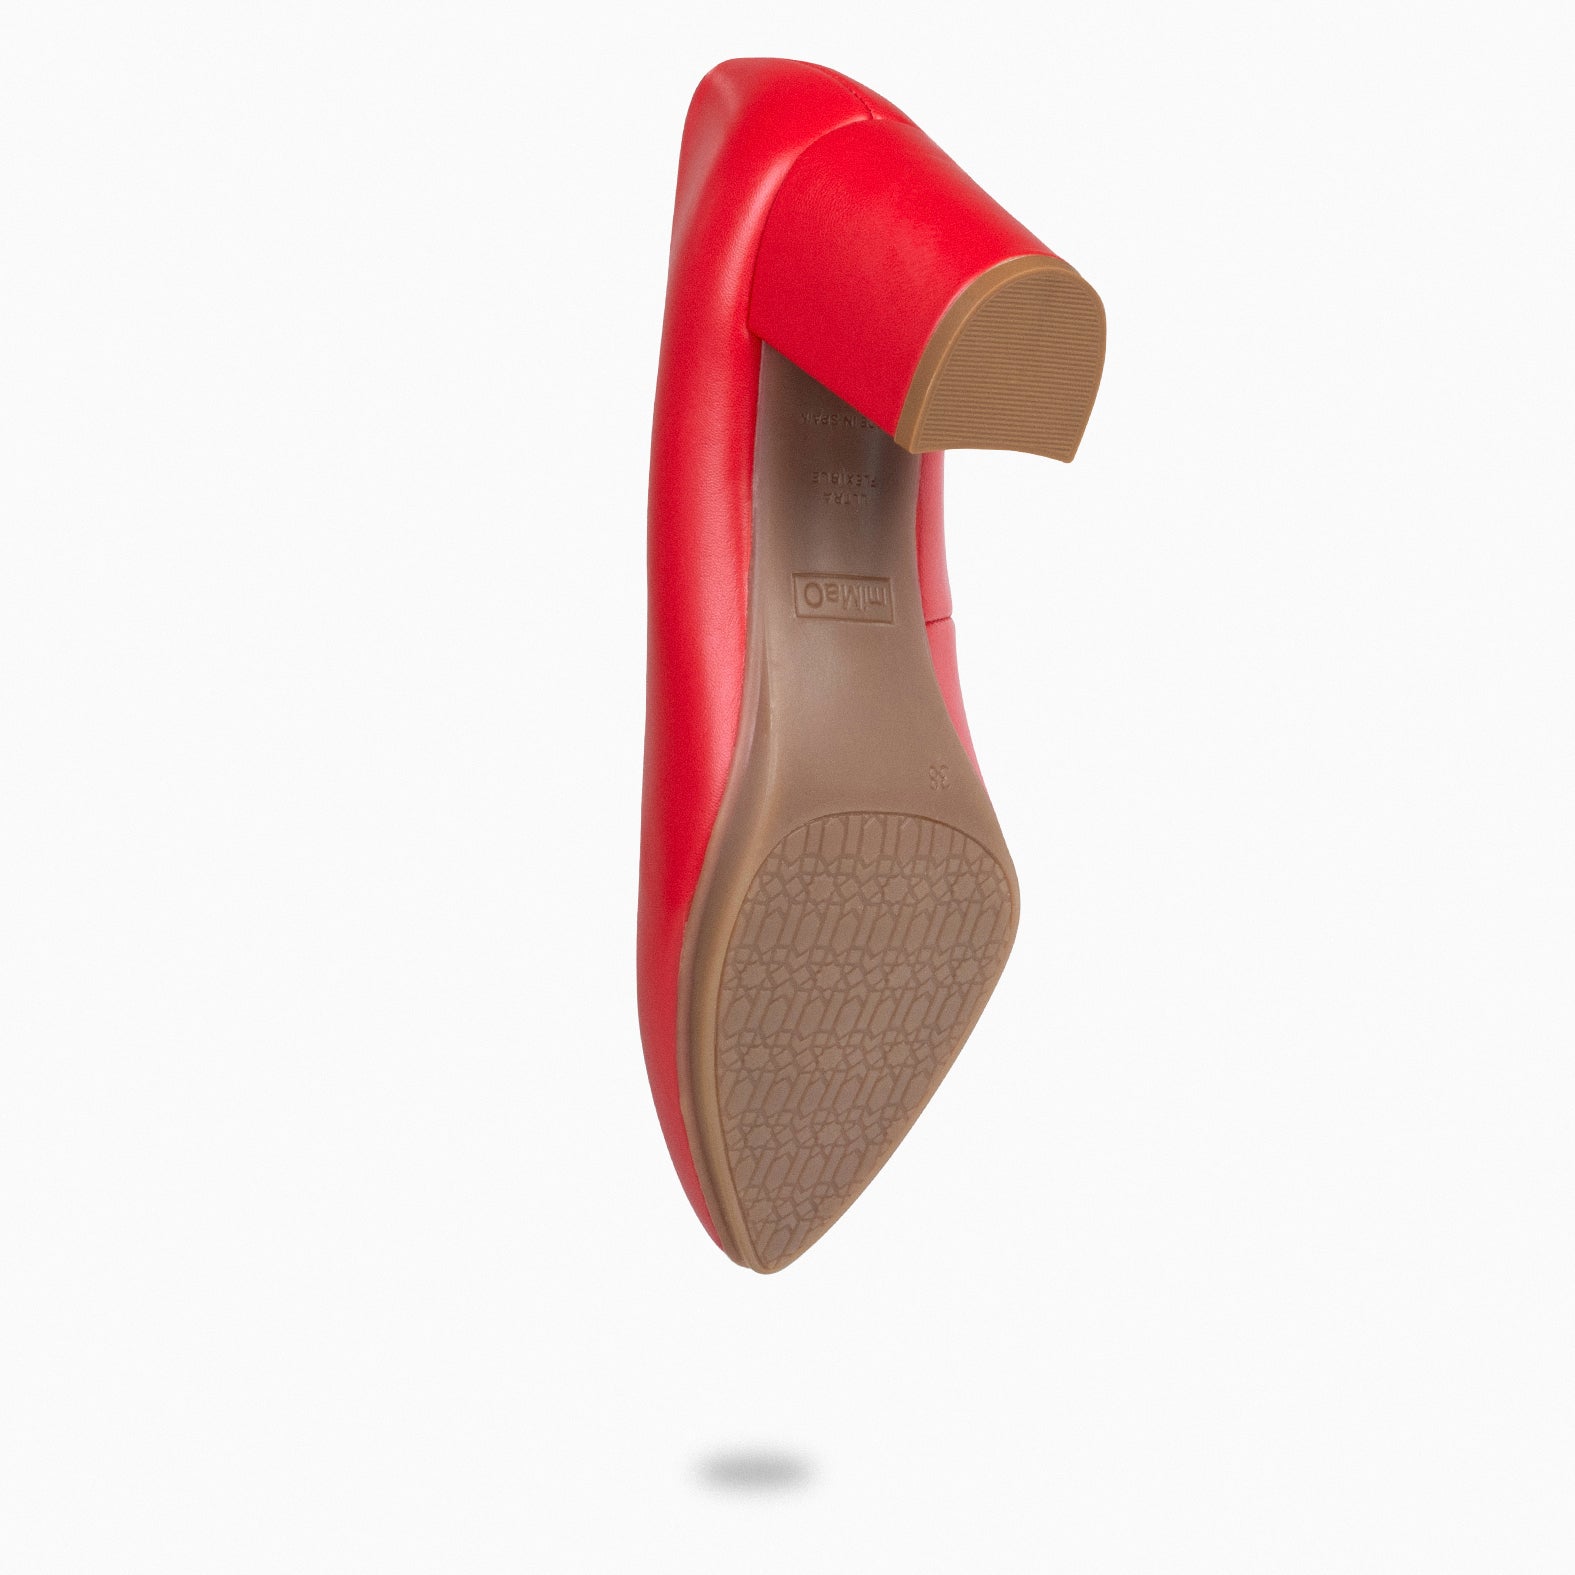 URBAN S SALON – RED nappa leather mid heel